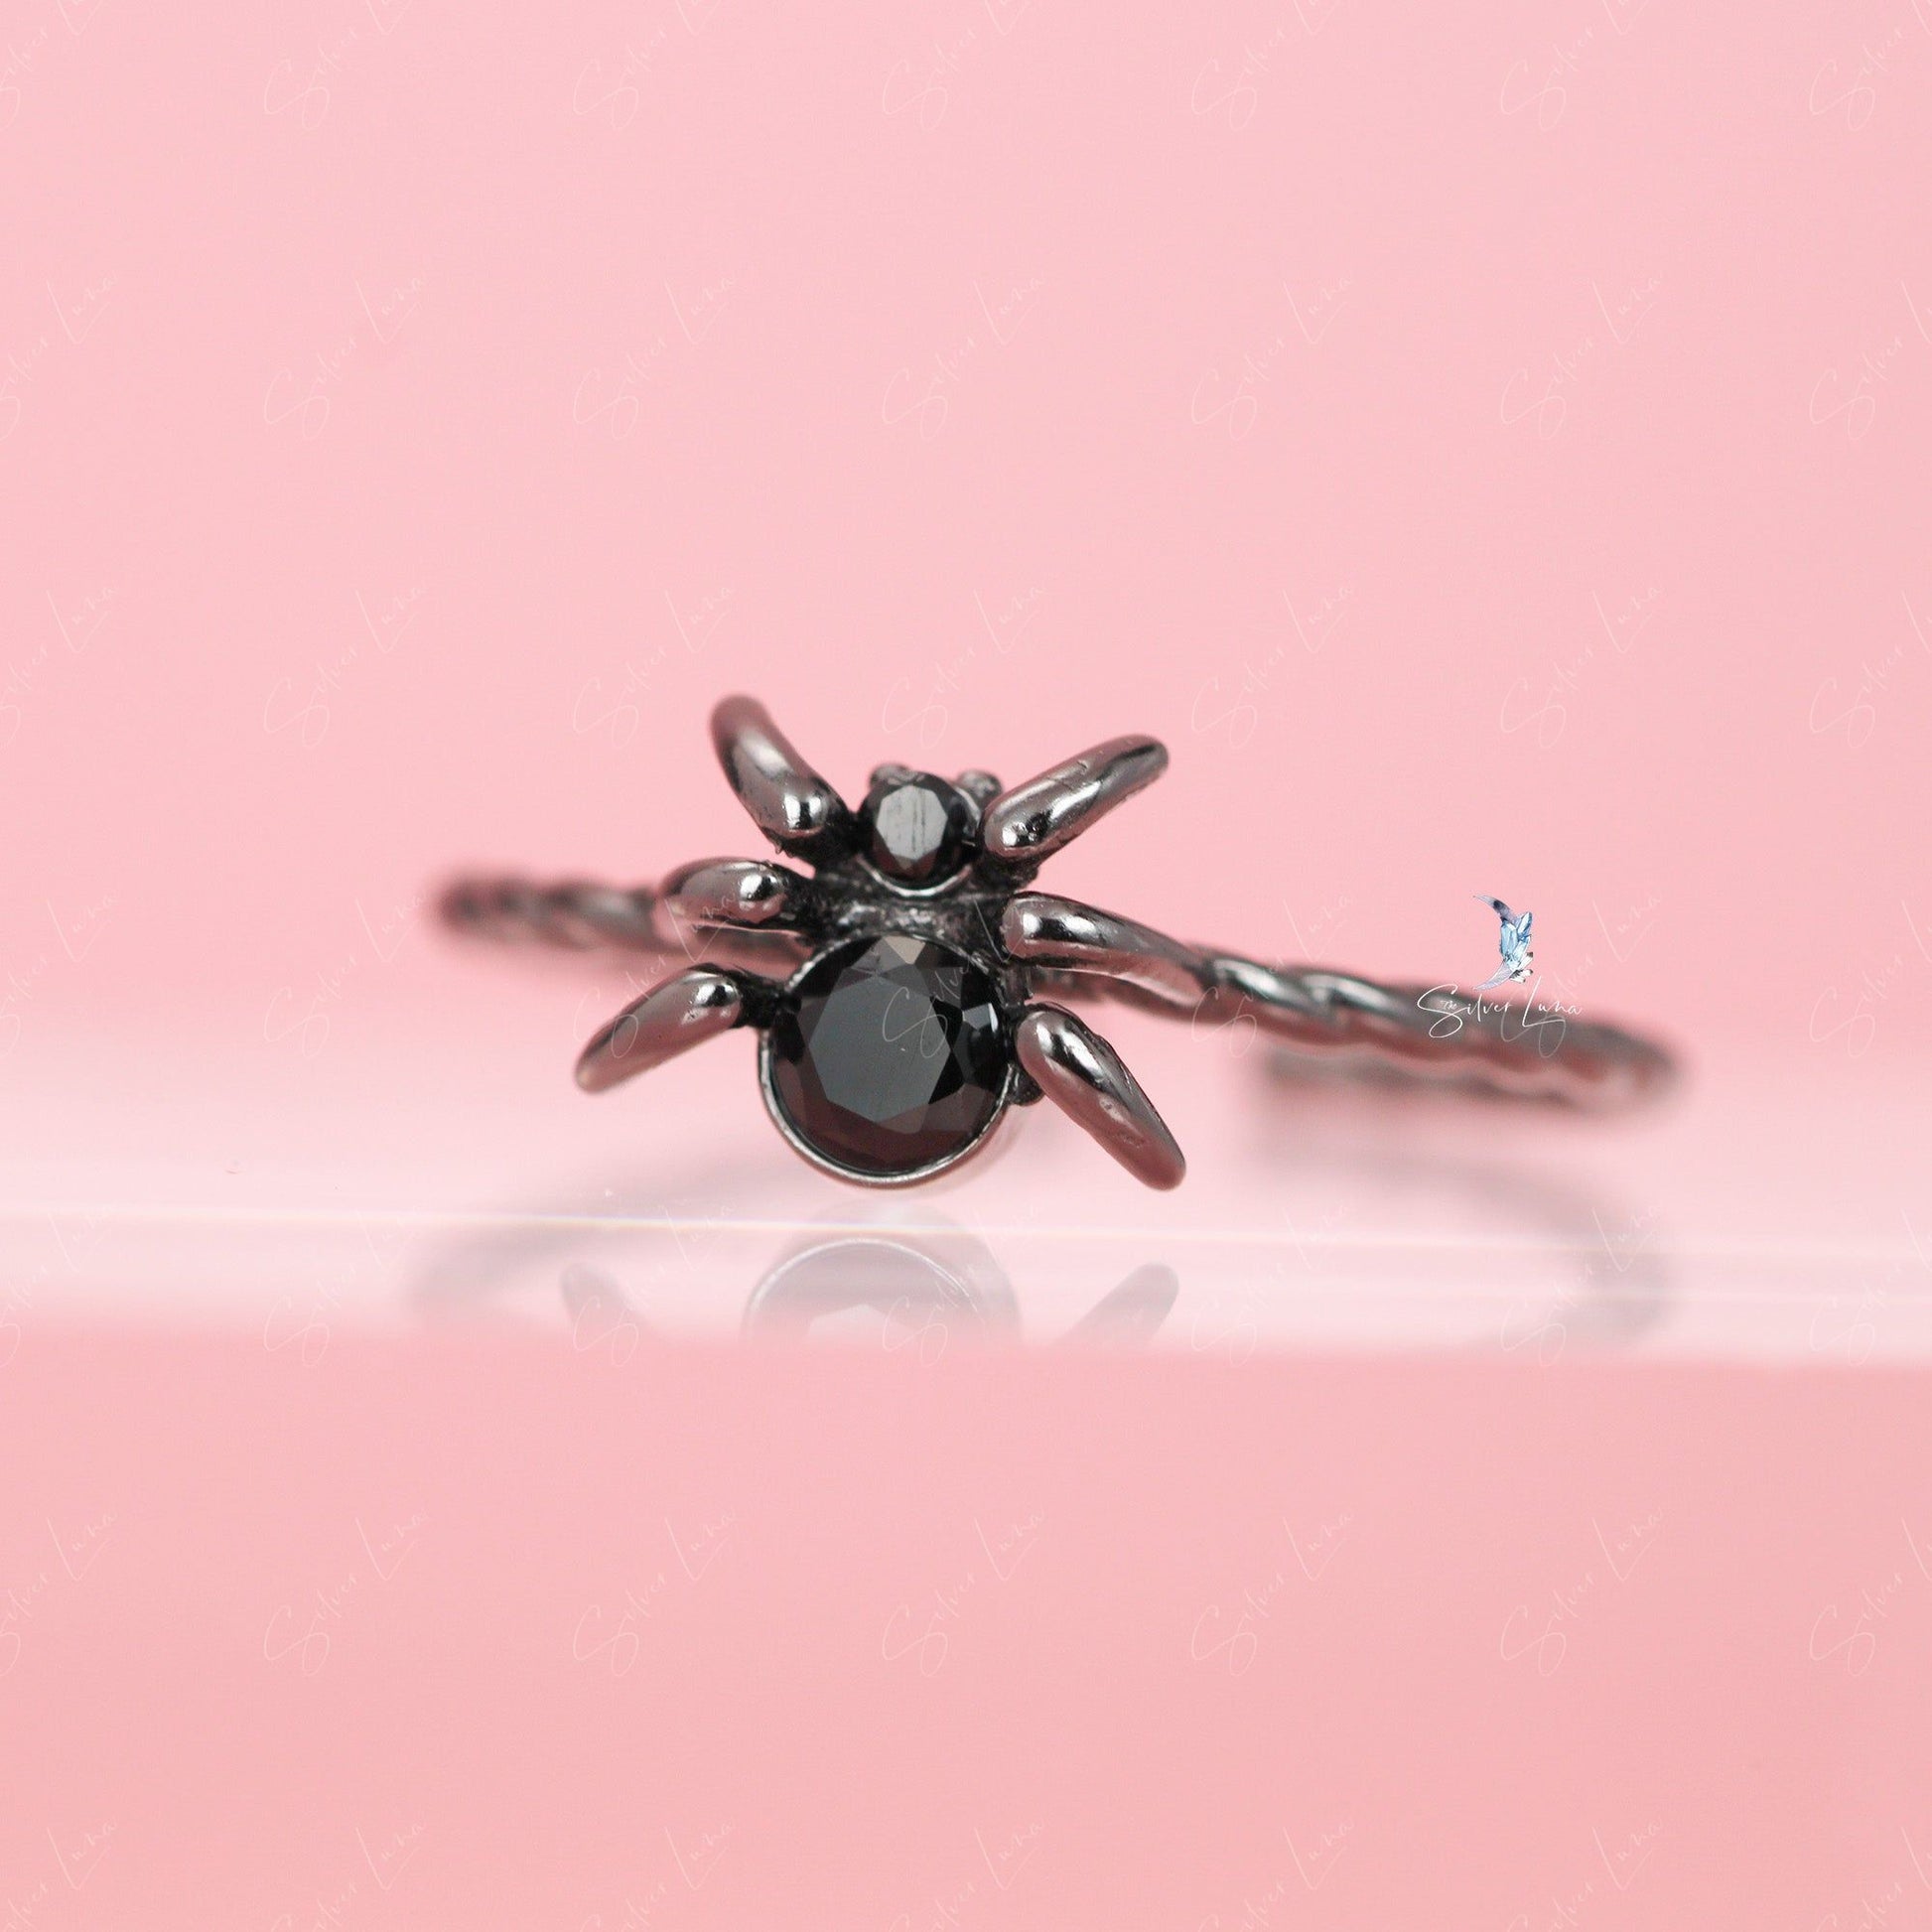 Adjustable Black Spider Animal Ring